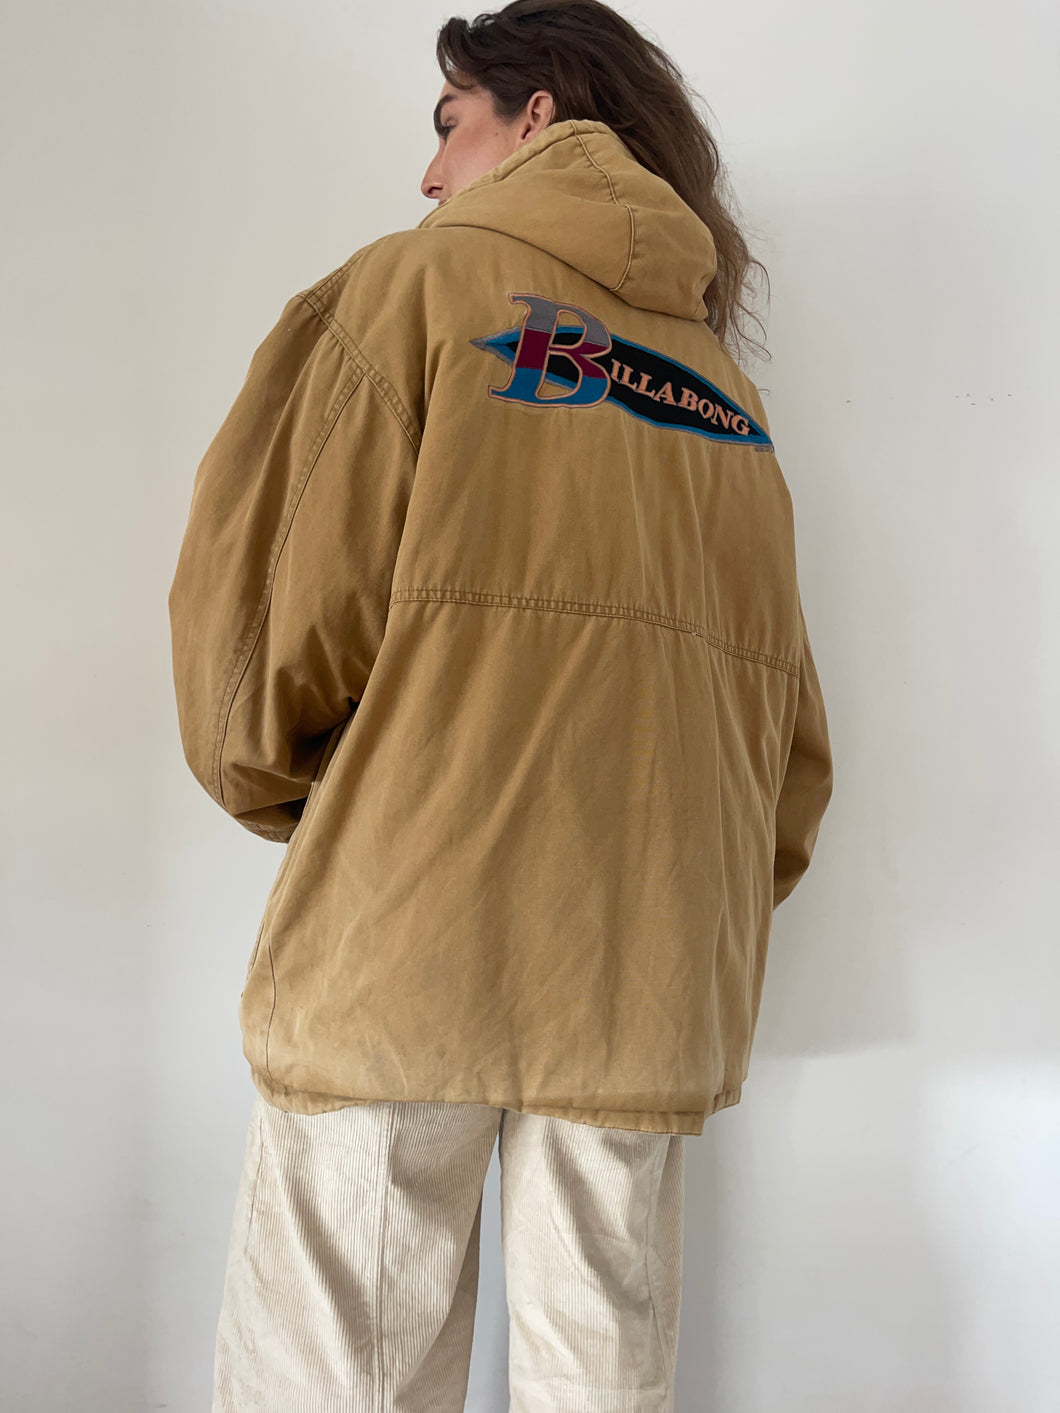 1992 Reversible Billabong Jacket (XL)